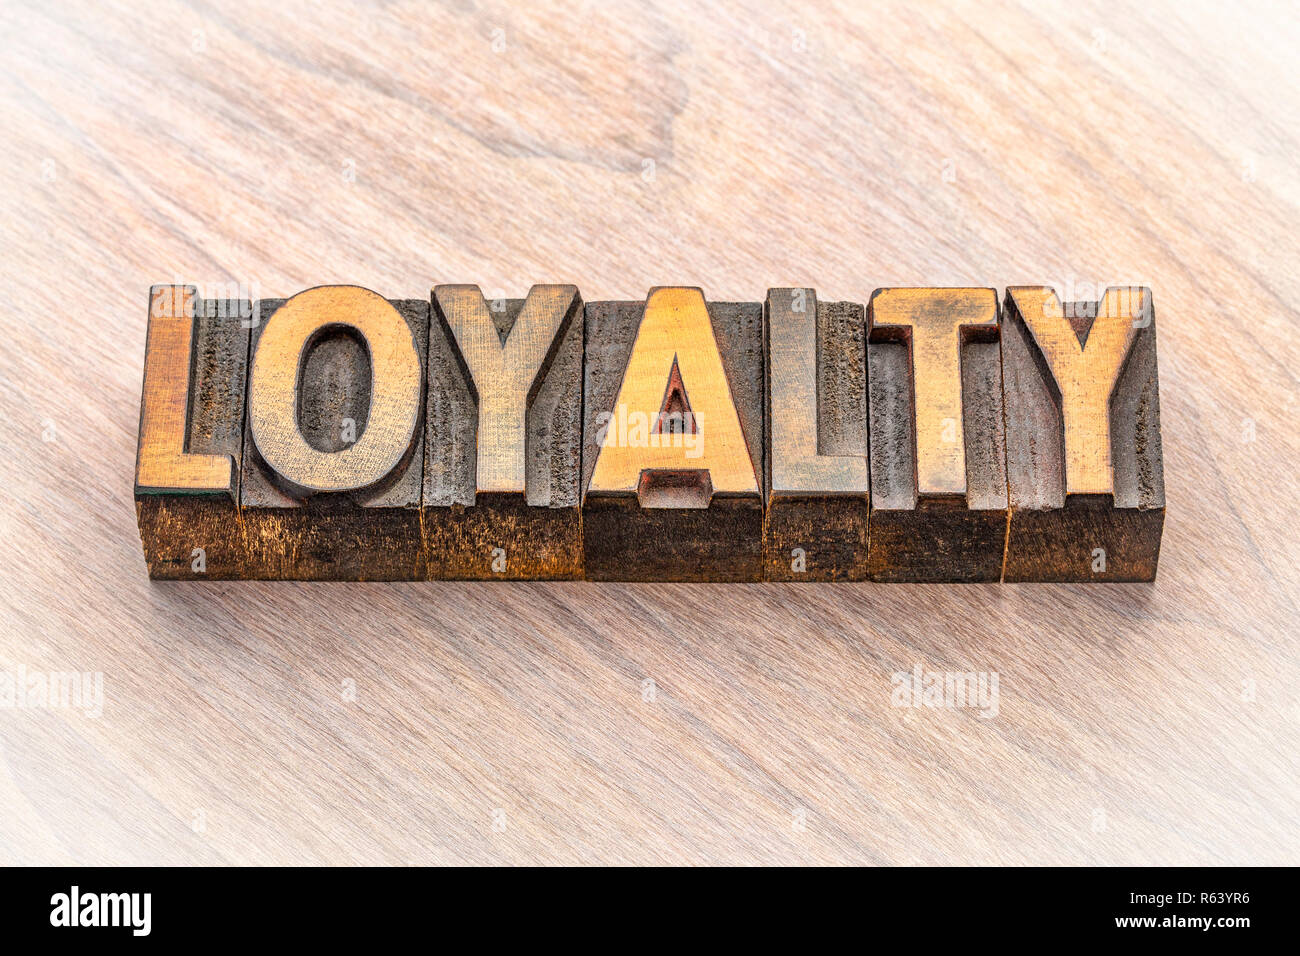 loyalty word in vintage letterpress wood type blocks Stock Photo